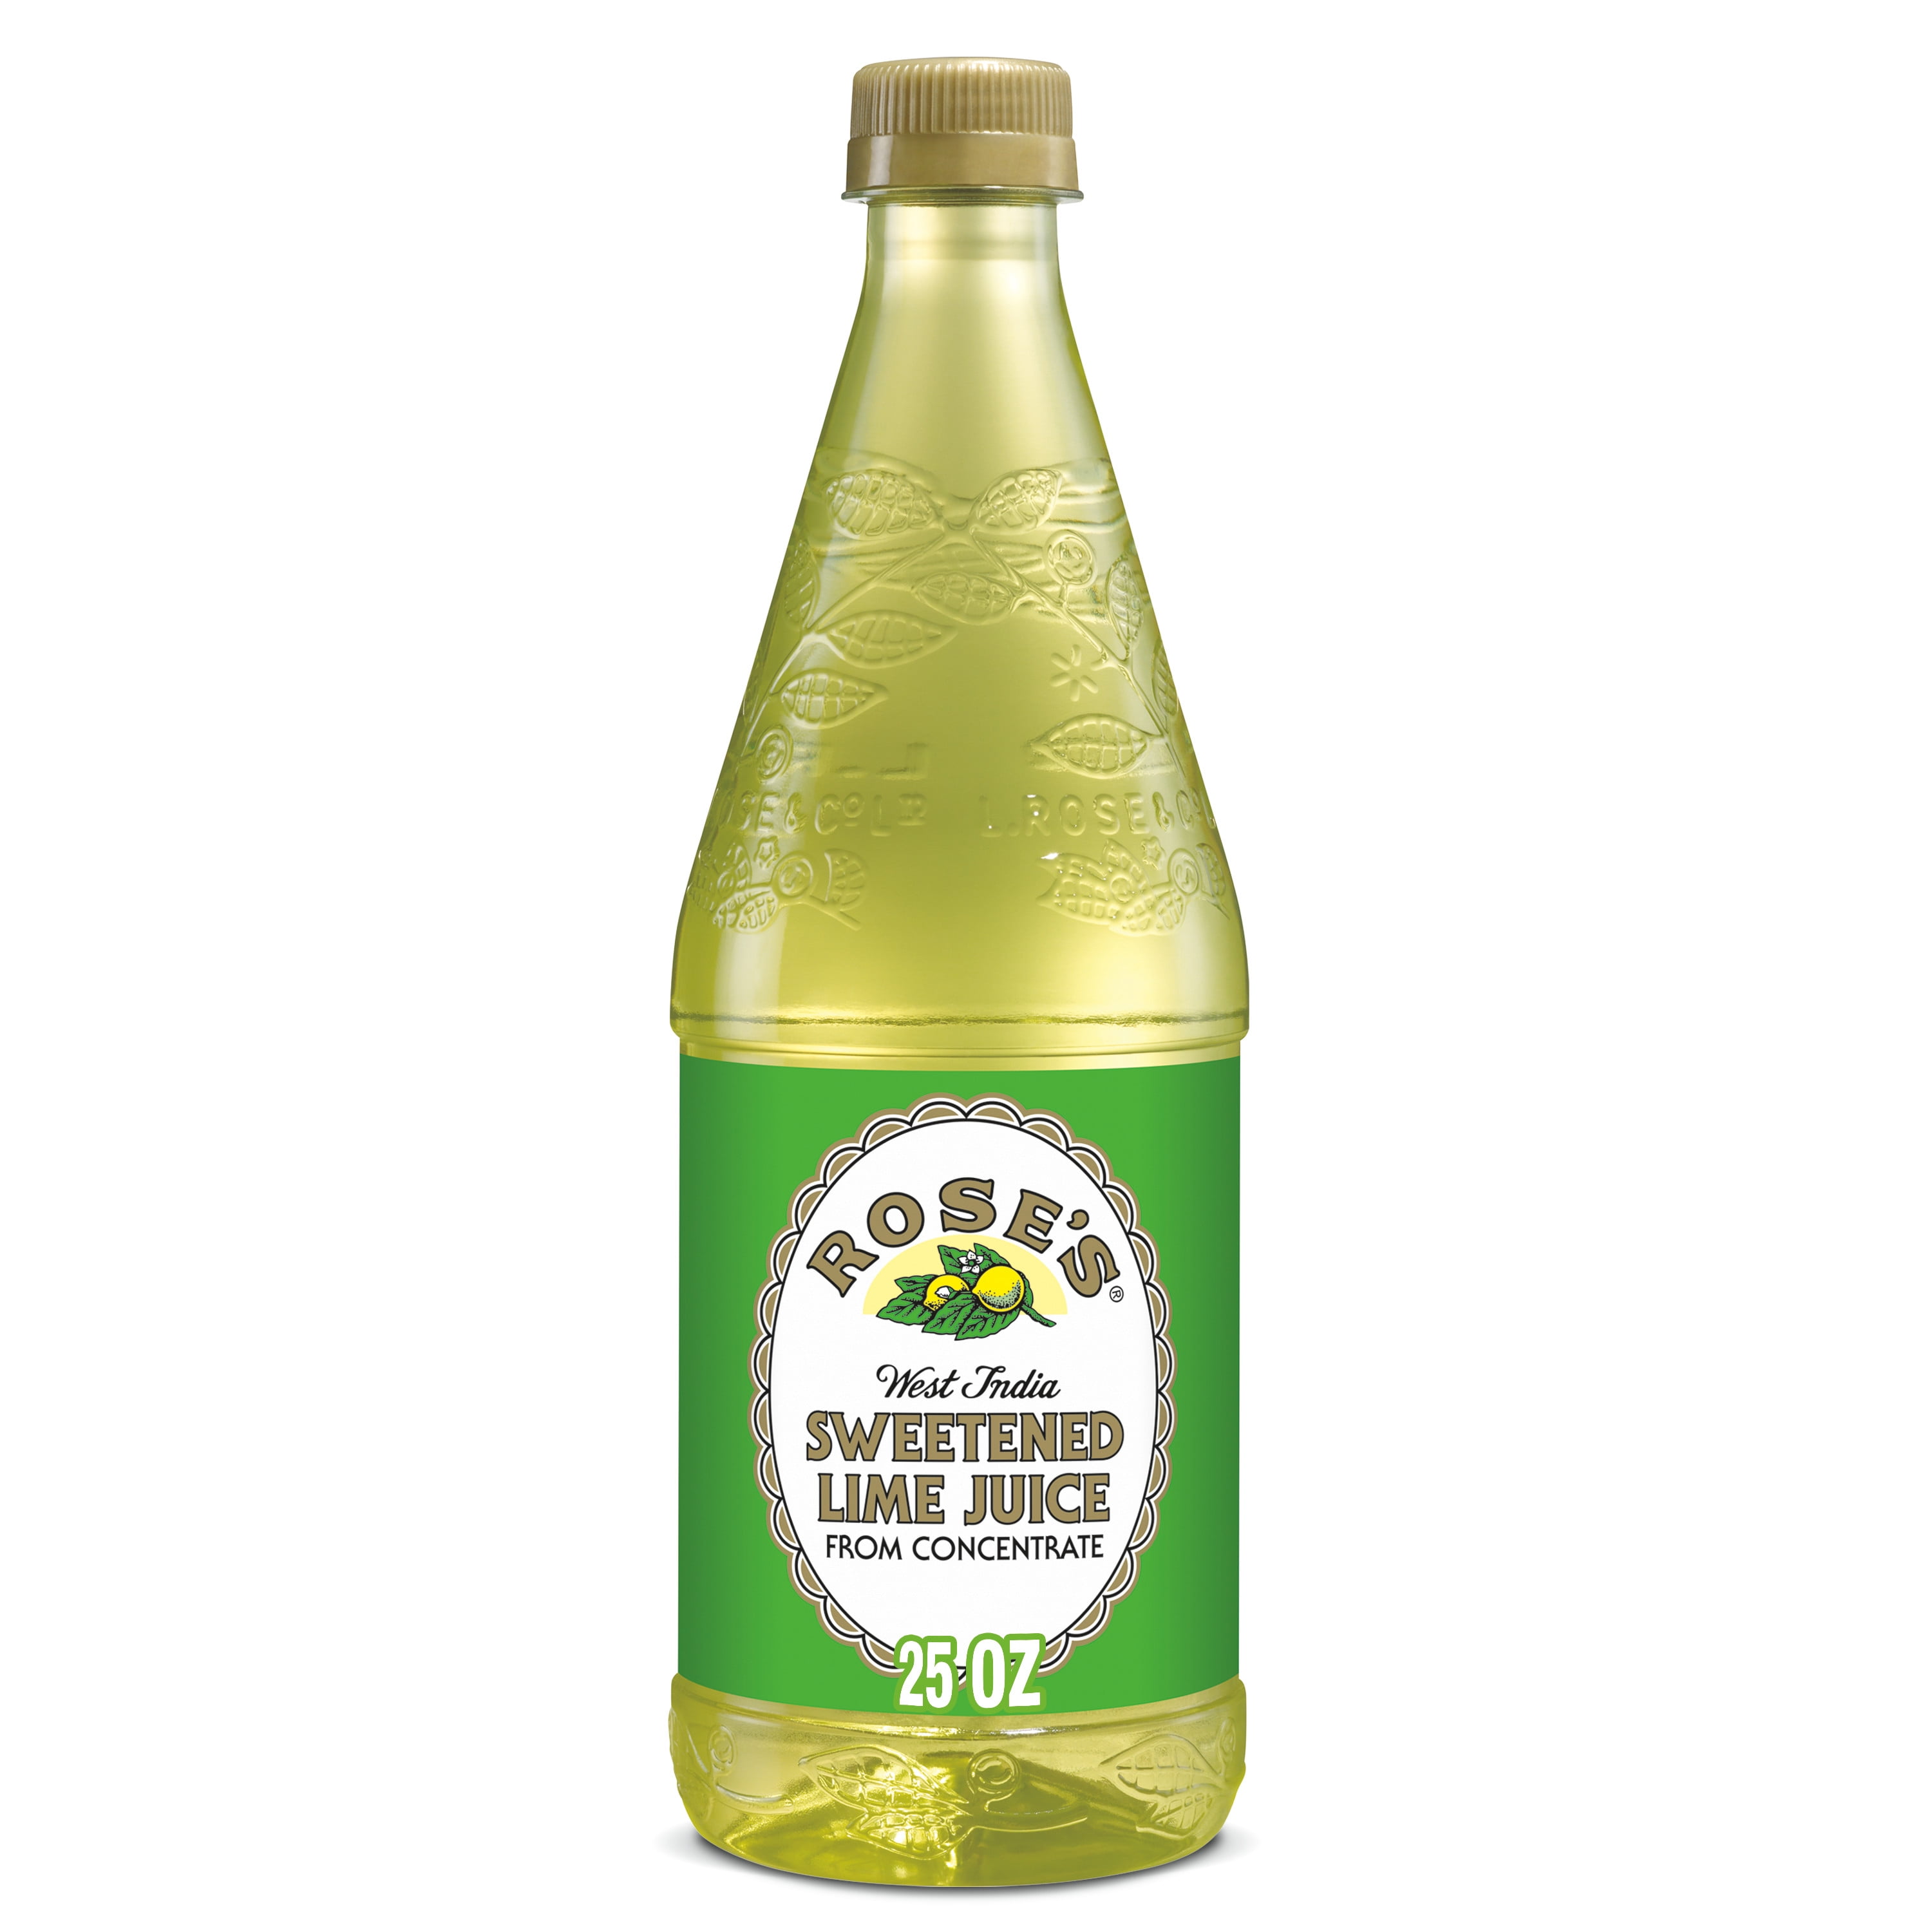 httpsipRose s Sweetened Lime Juice 25 fl oz bottle172532408